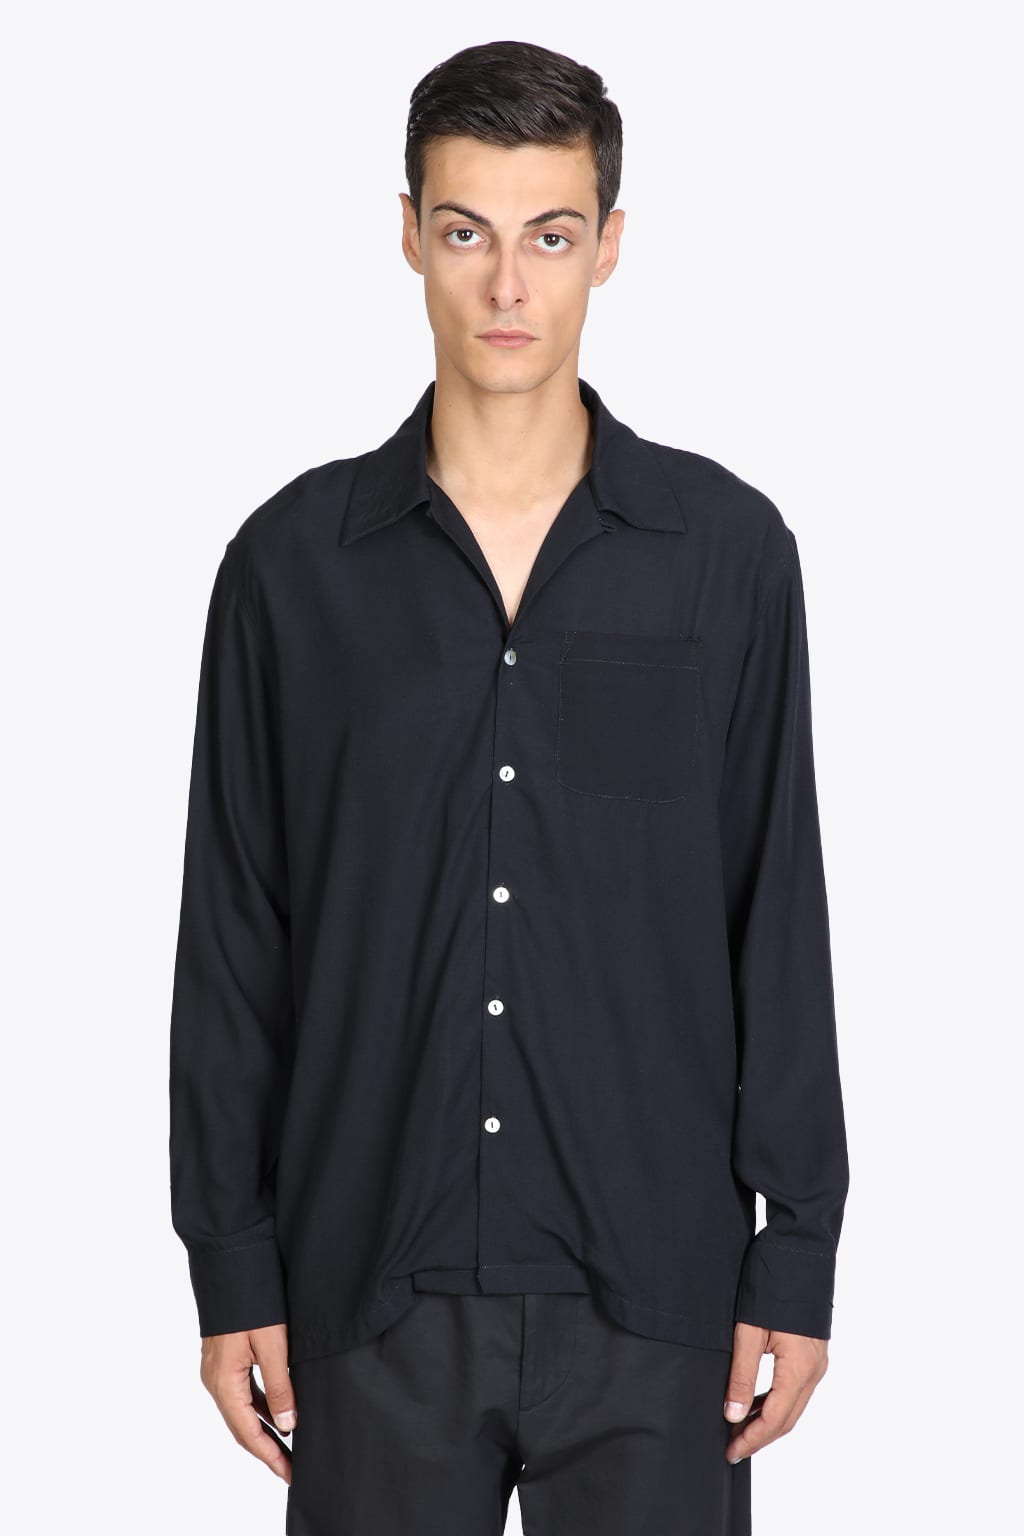 Endless Joy Satin Silk Long Sleeve Shirt With M.o.p Buttons Black rayon shirt with back print - Solis Luna shirt